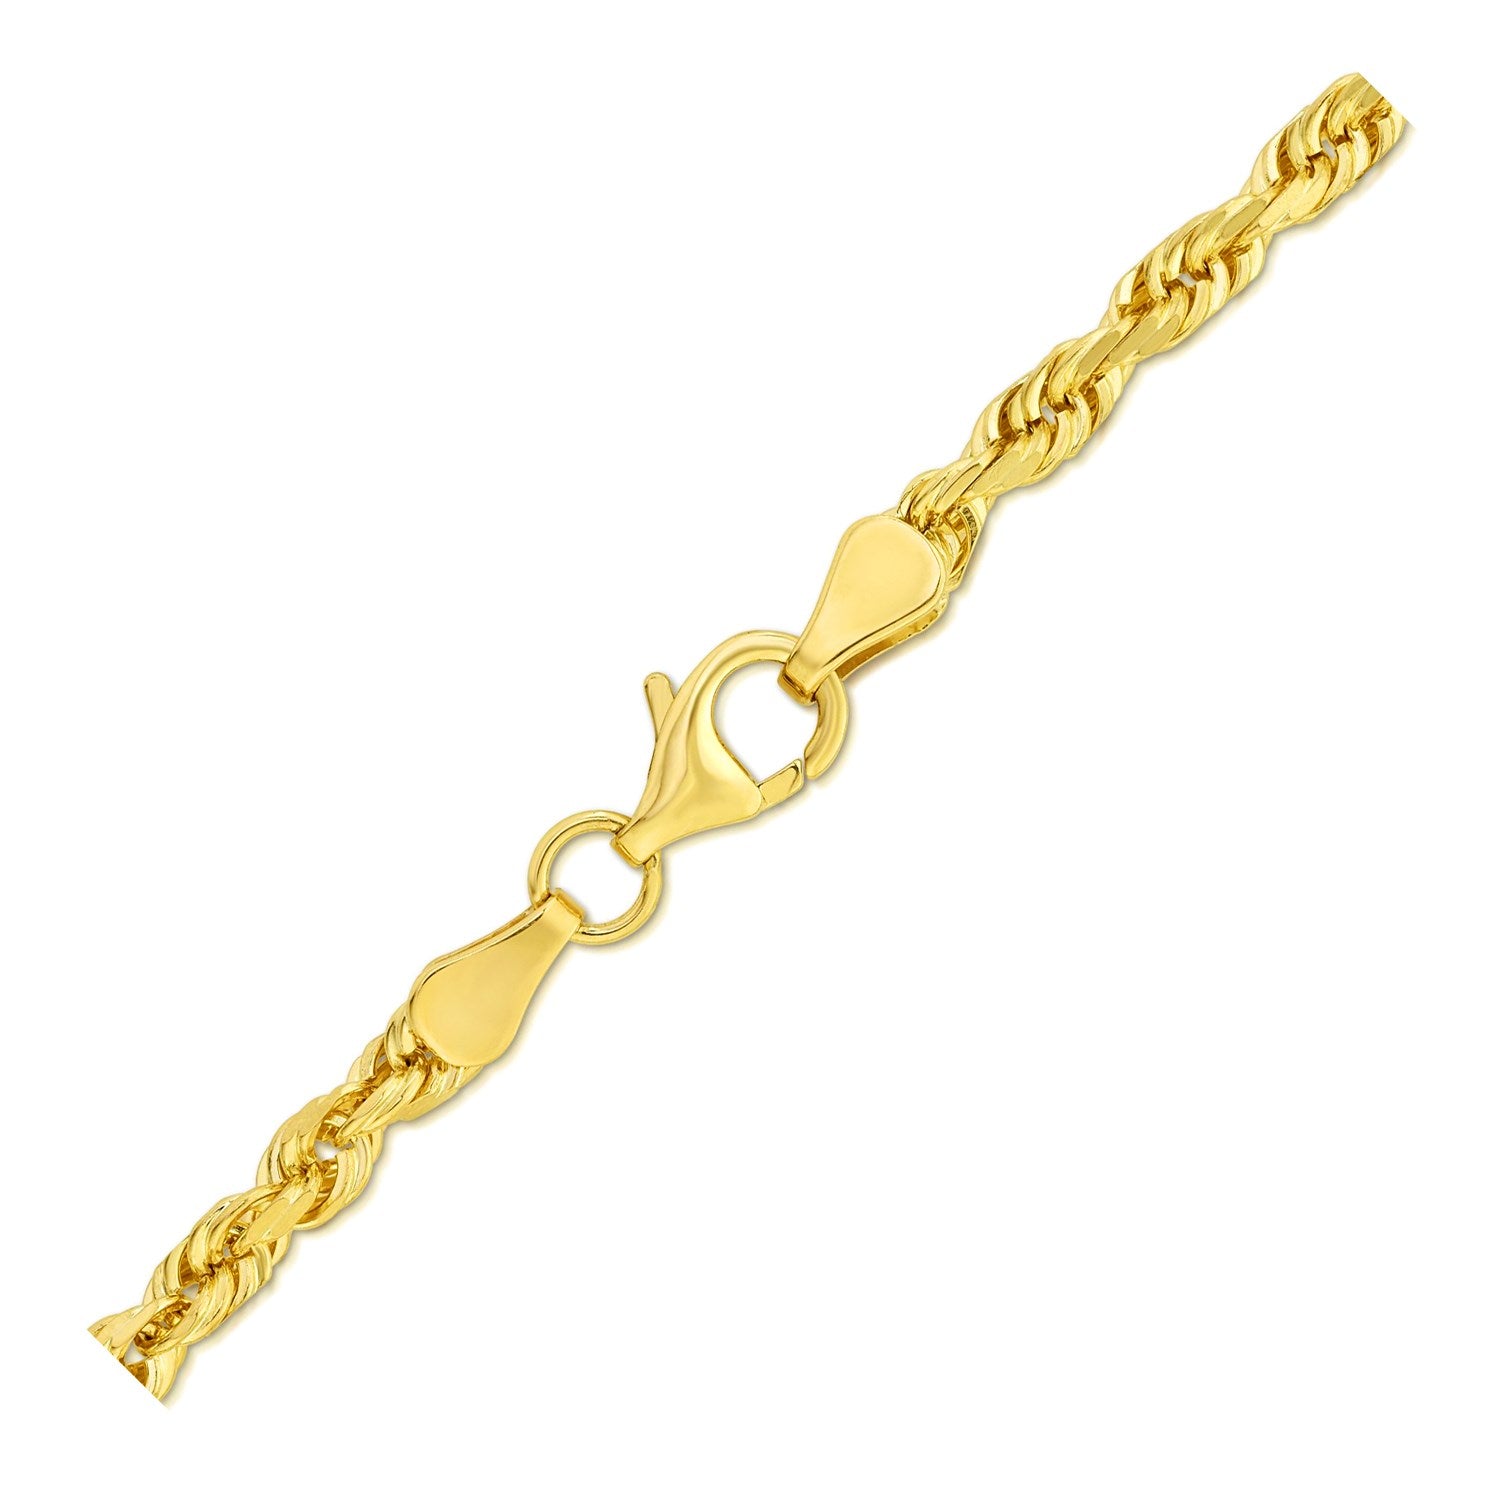 4.0mm 10k Yellow Gold Solid Diamond Cut Rope Bracelet